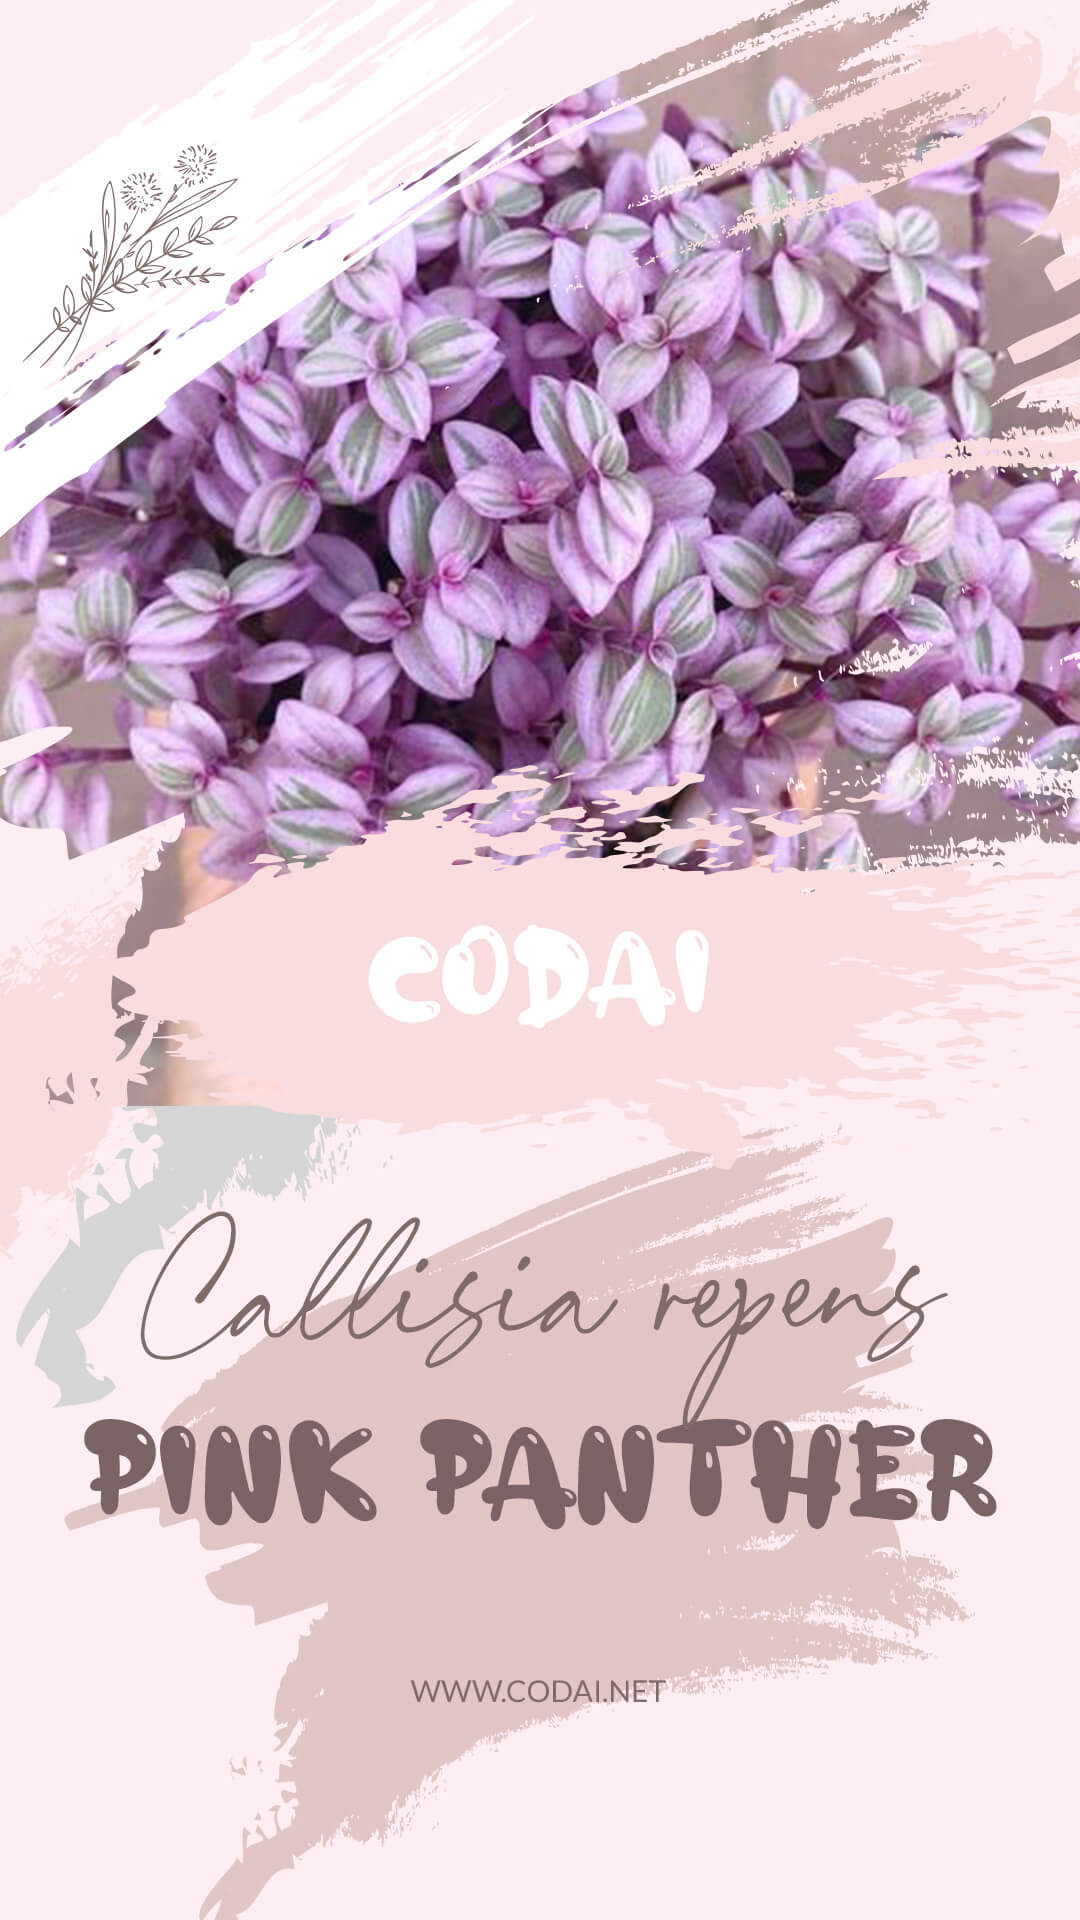 Chậu Cây Callisia repens Pink Lady 'Violet' (Callisia repens Pink Panther, Pink Lady Roselings 'Violet') - Thài Lài Mini Pink Lady 'Violet'